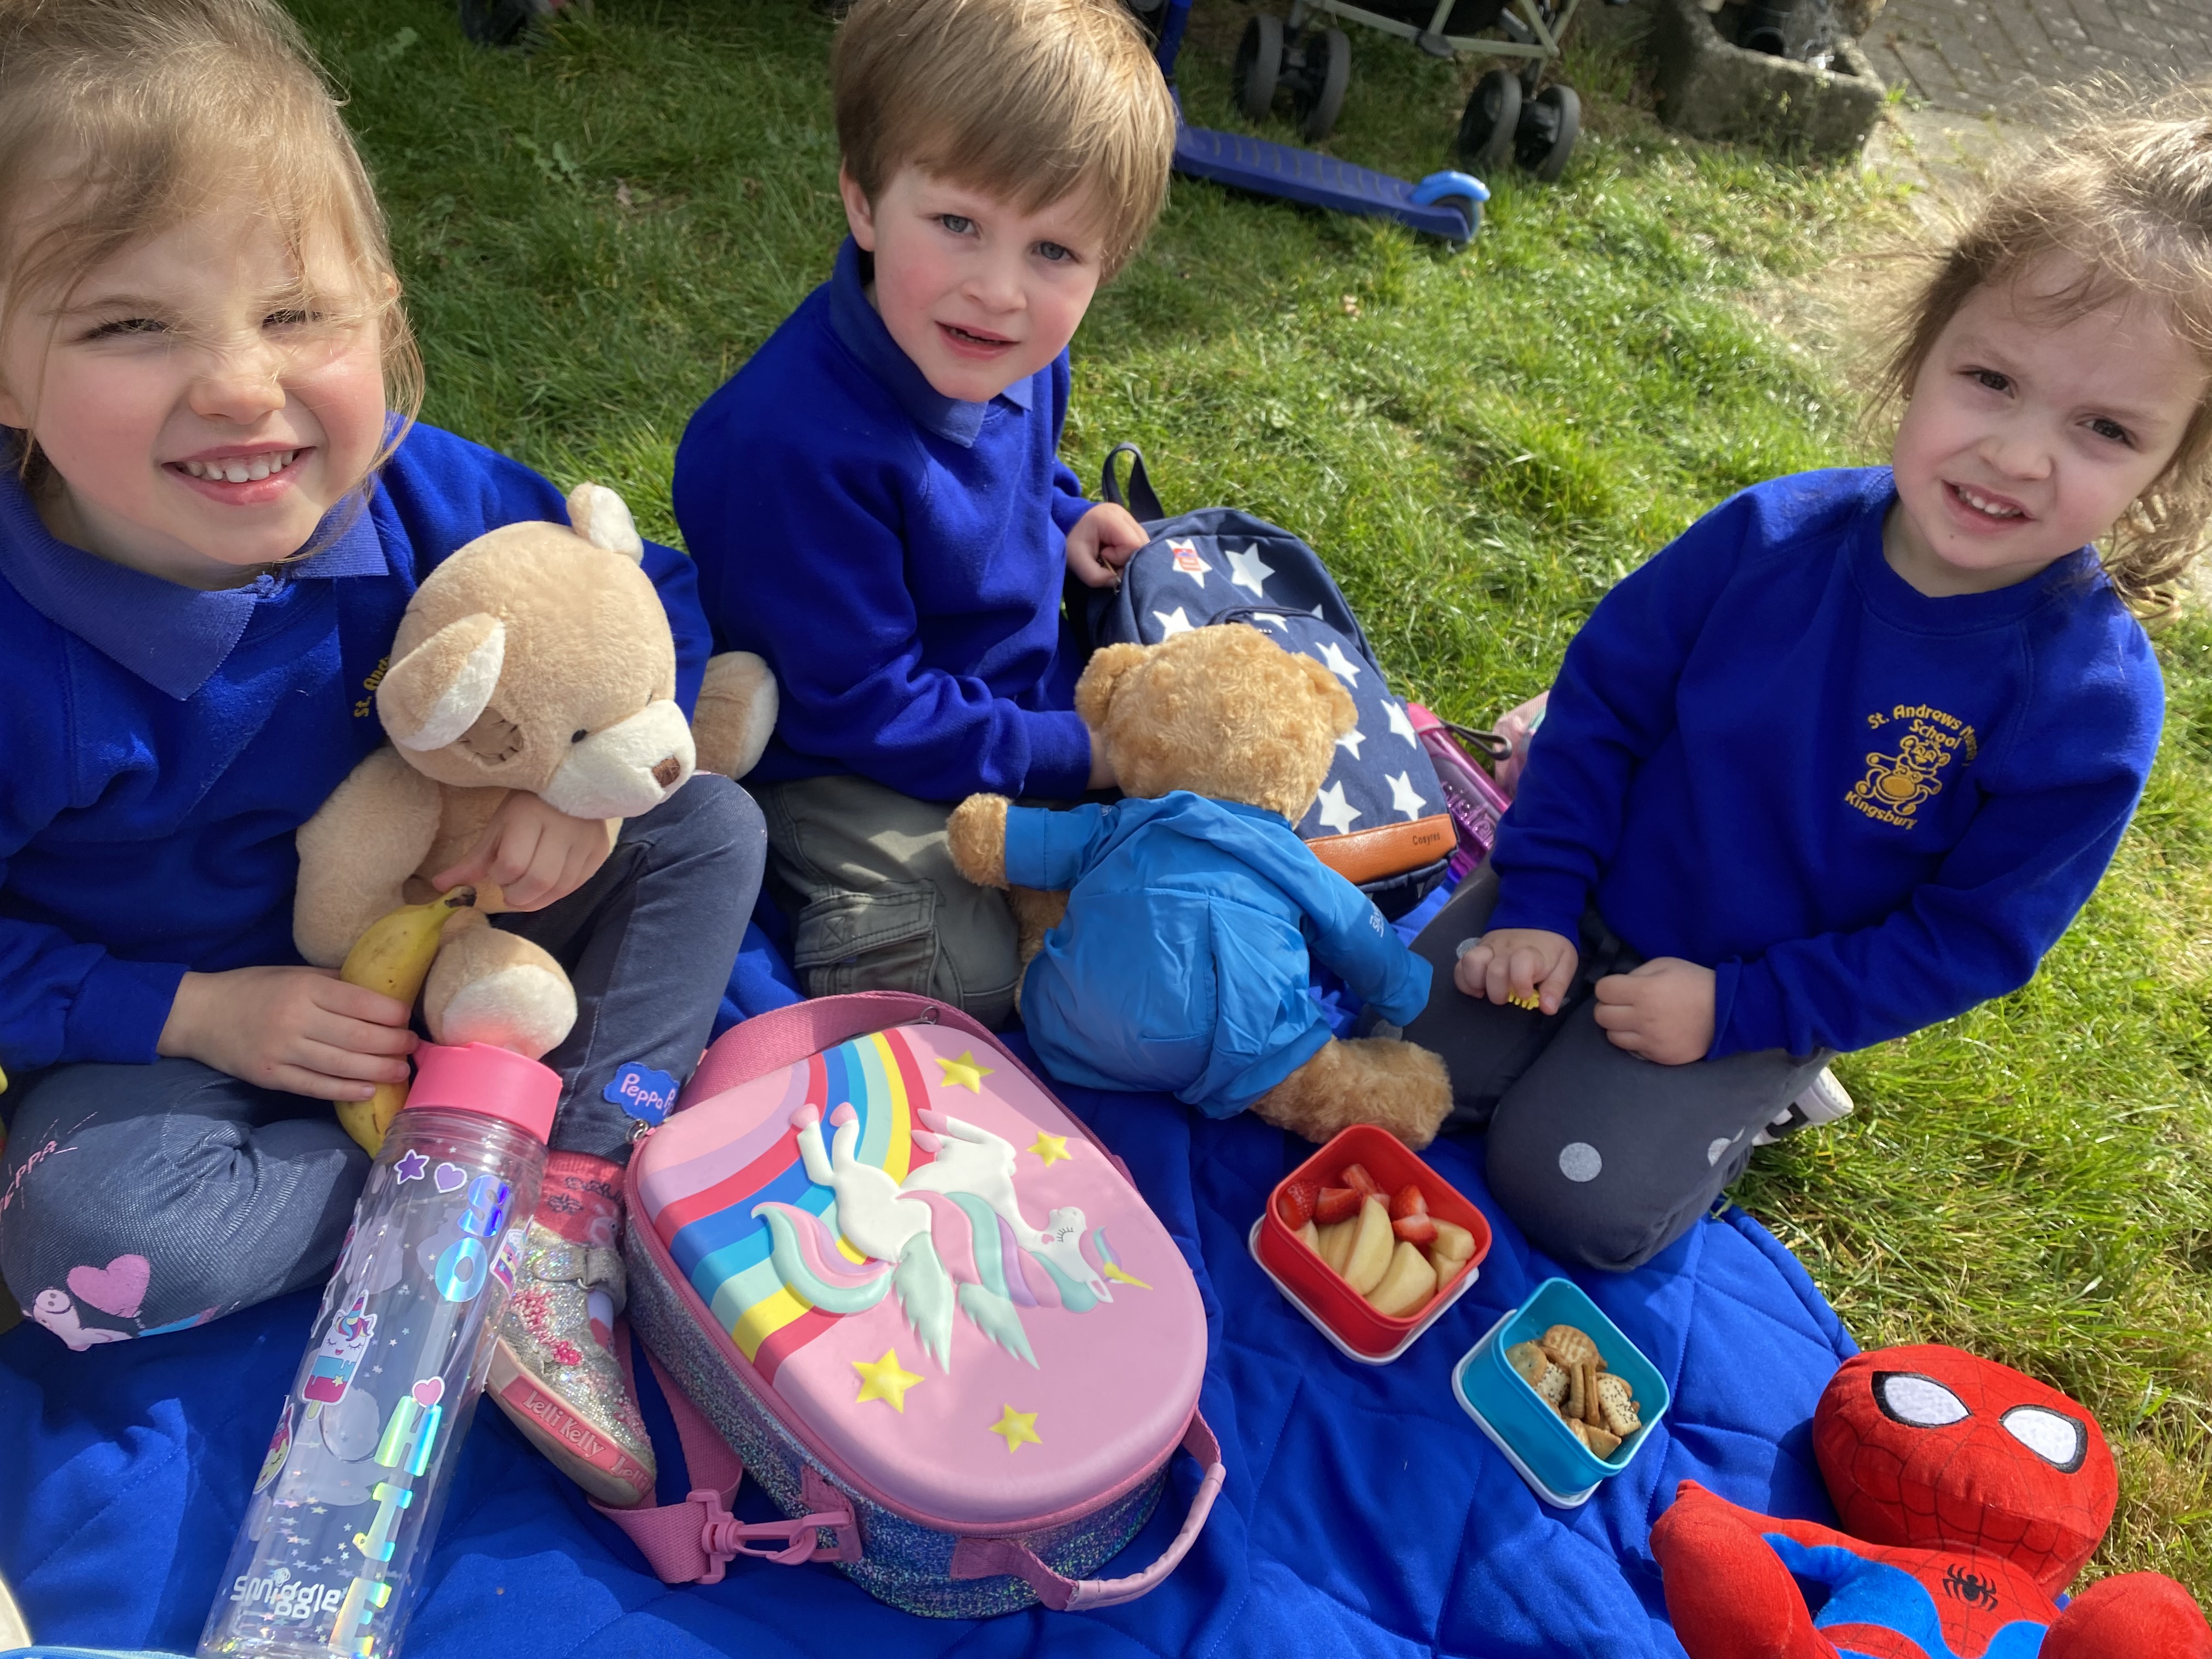 Nothing like a teddy bear picnic!